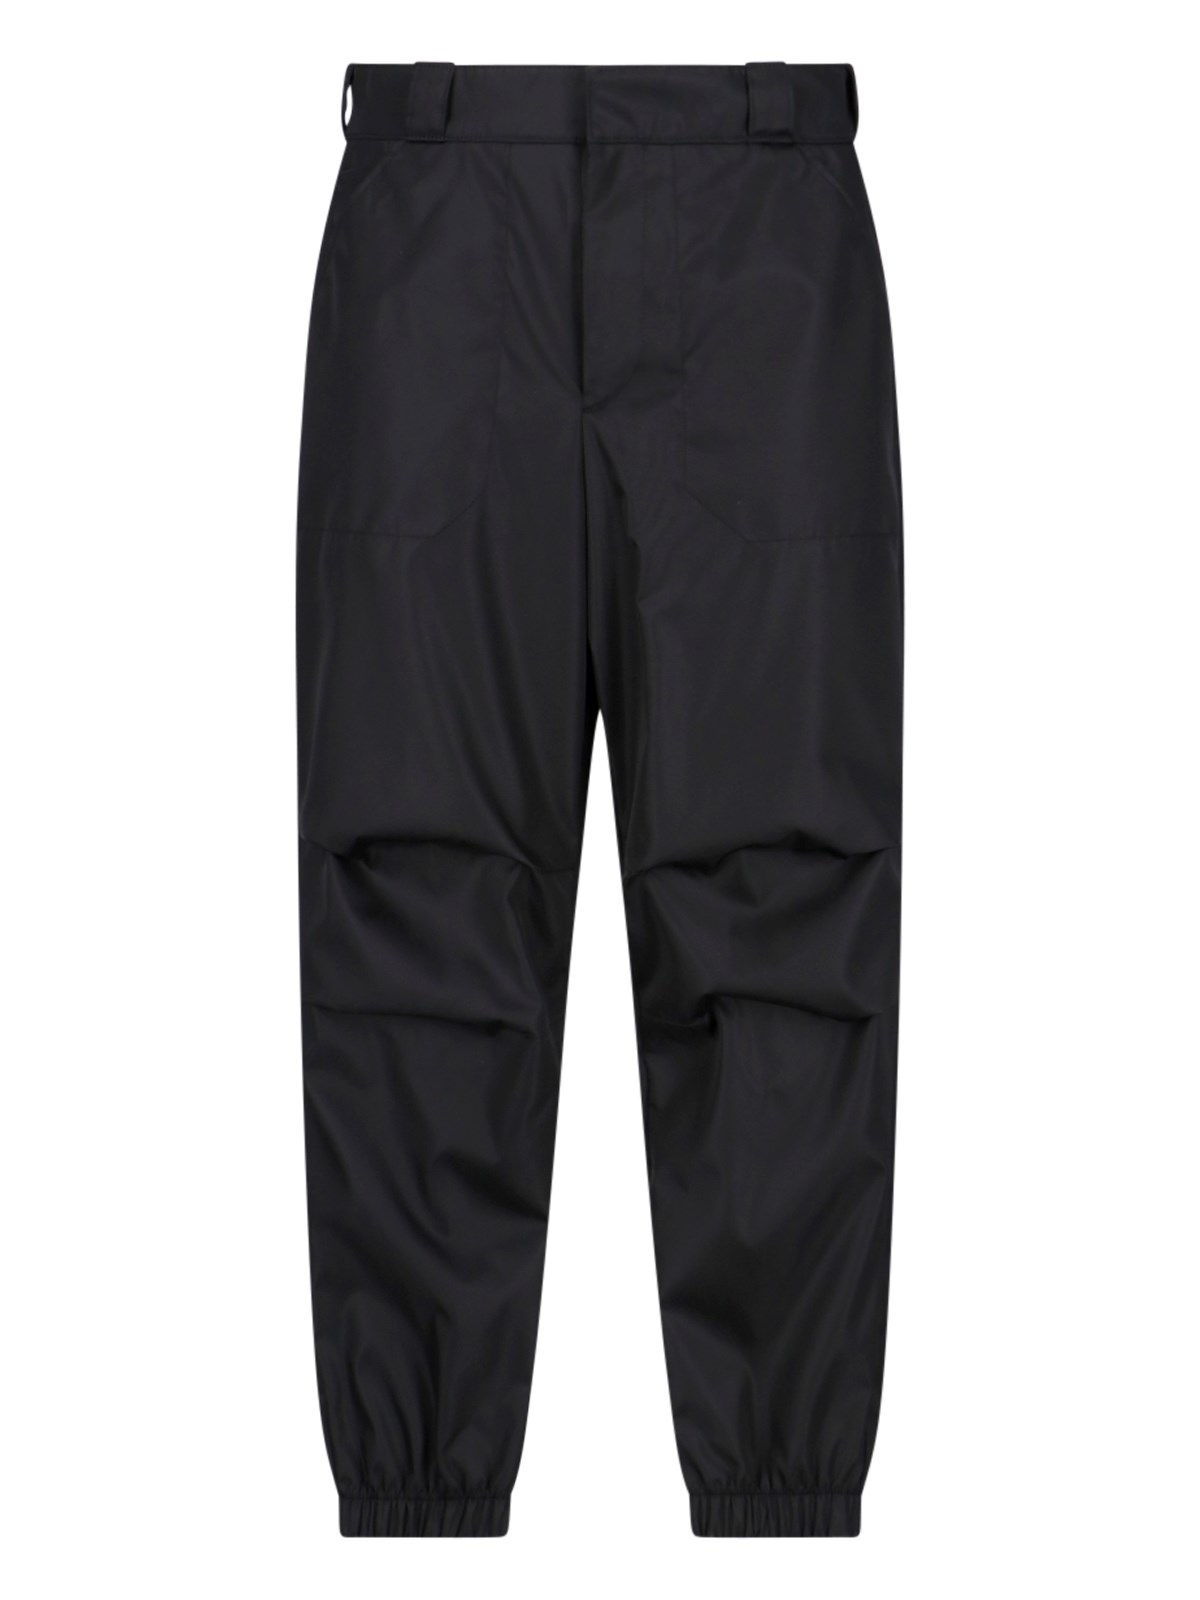 Prada Nylon pants available on SUGAR - 133899